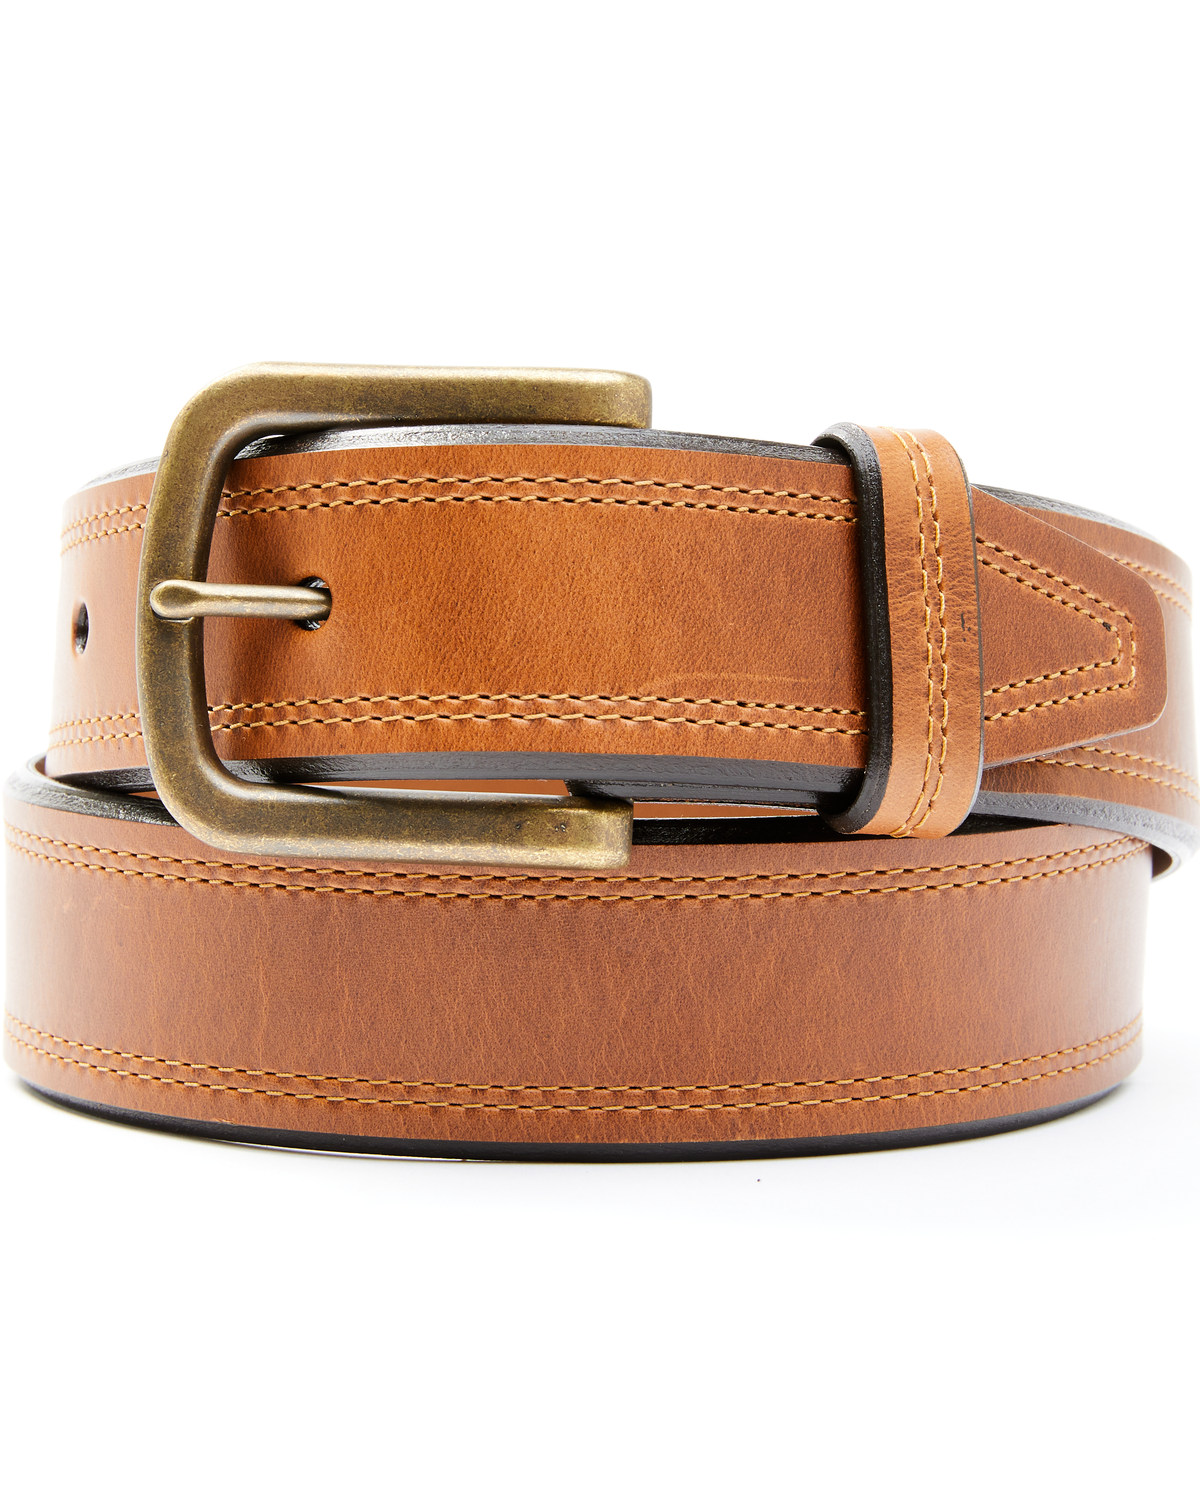 Hawx Men's Smooth Brown Leather Belt